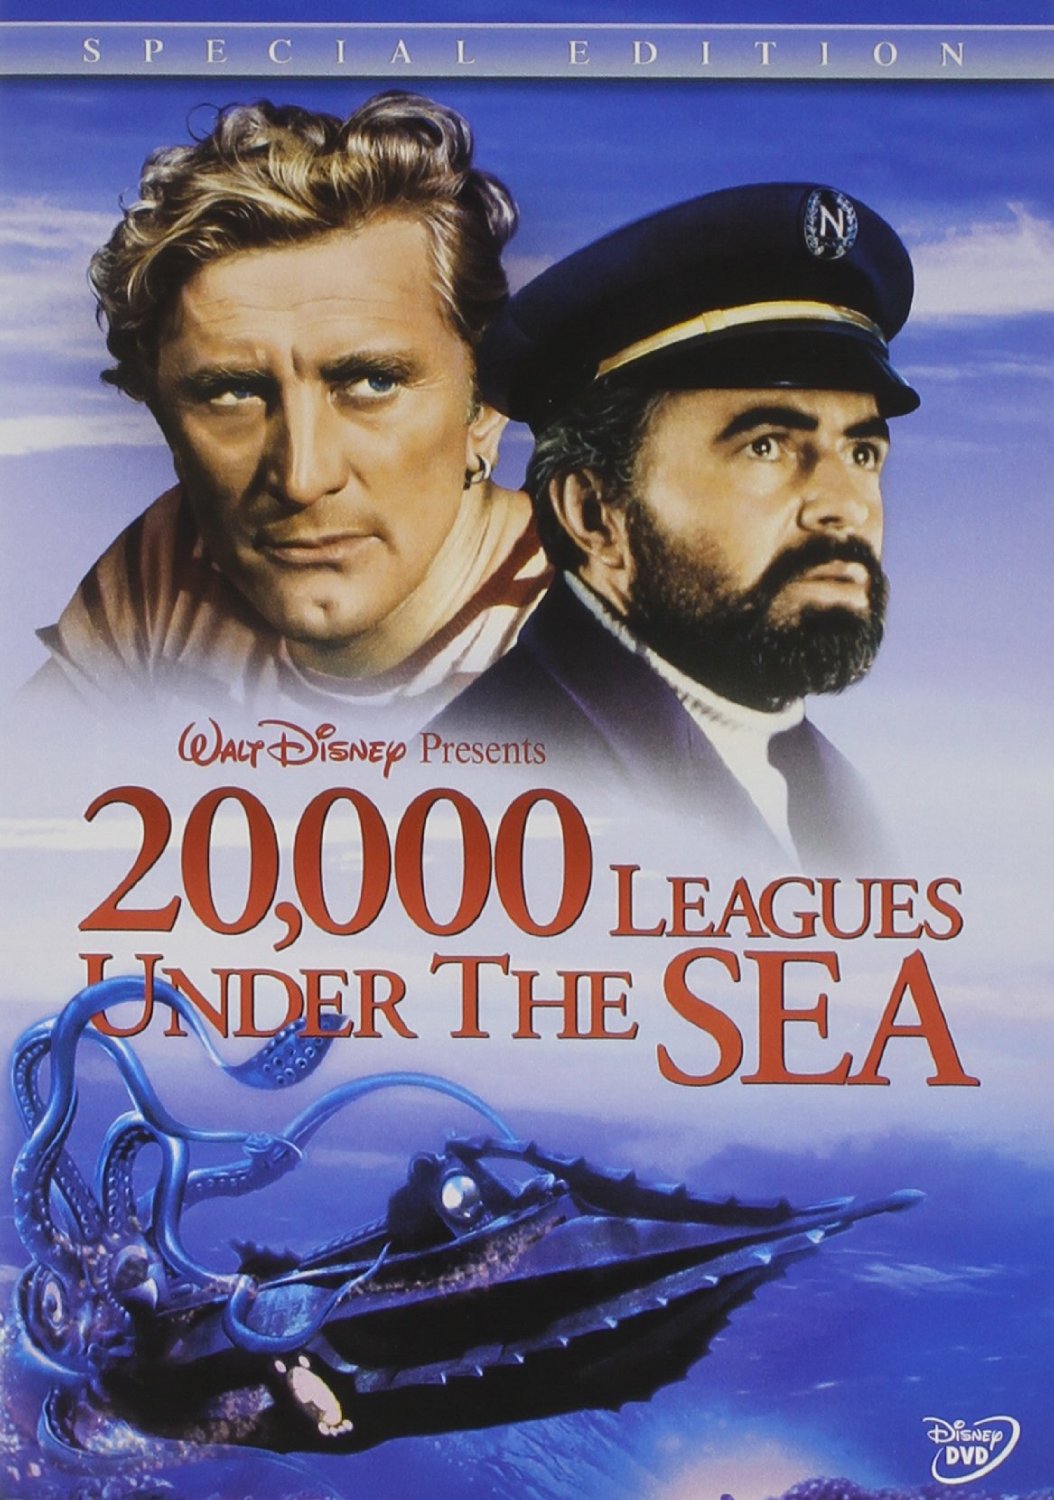 20,000 Leagues Under the Sea, starring James Mason, Kirk Douglas, Paul Lukas, Peter Lorre